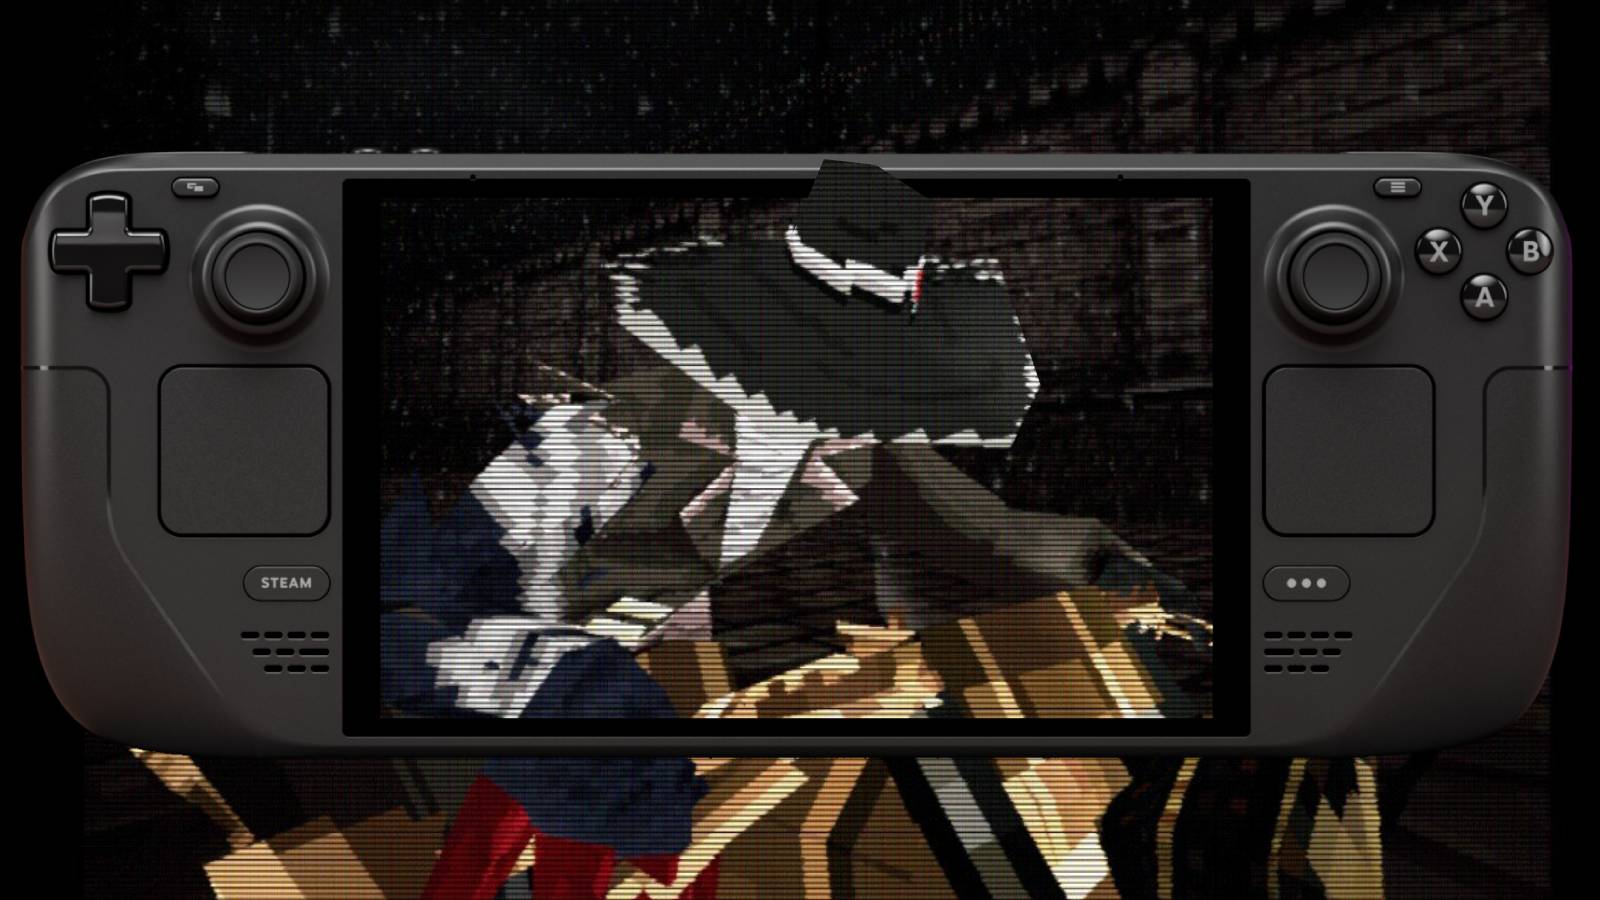 A screenshot from Nightmare Kart on the screen of a Steam Deck.